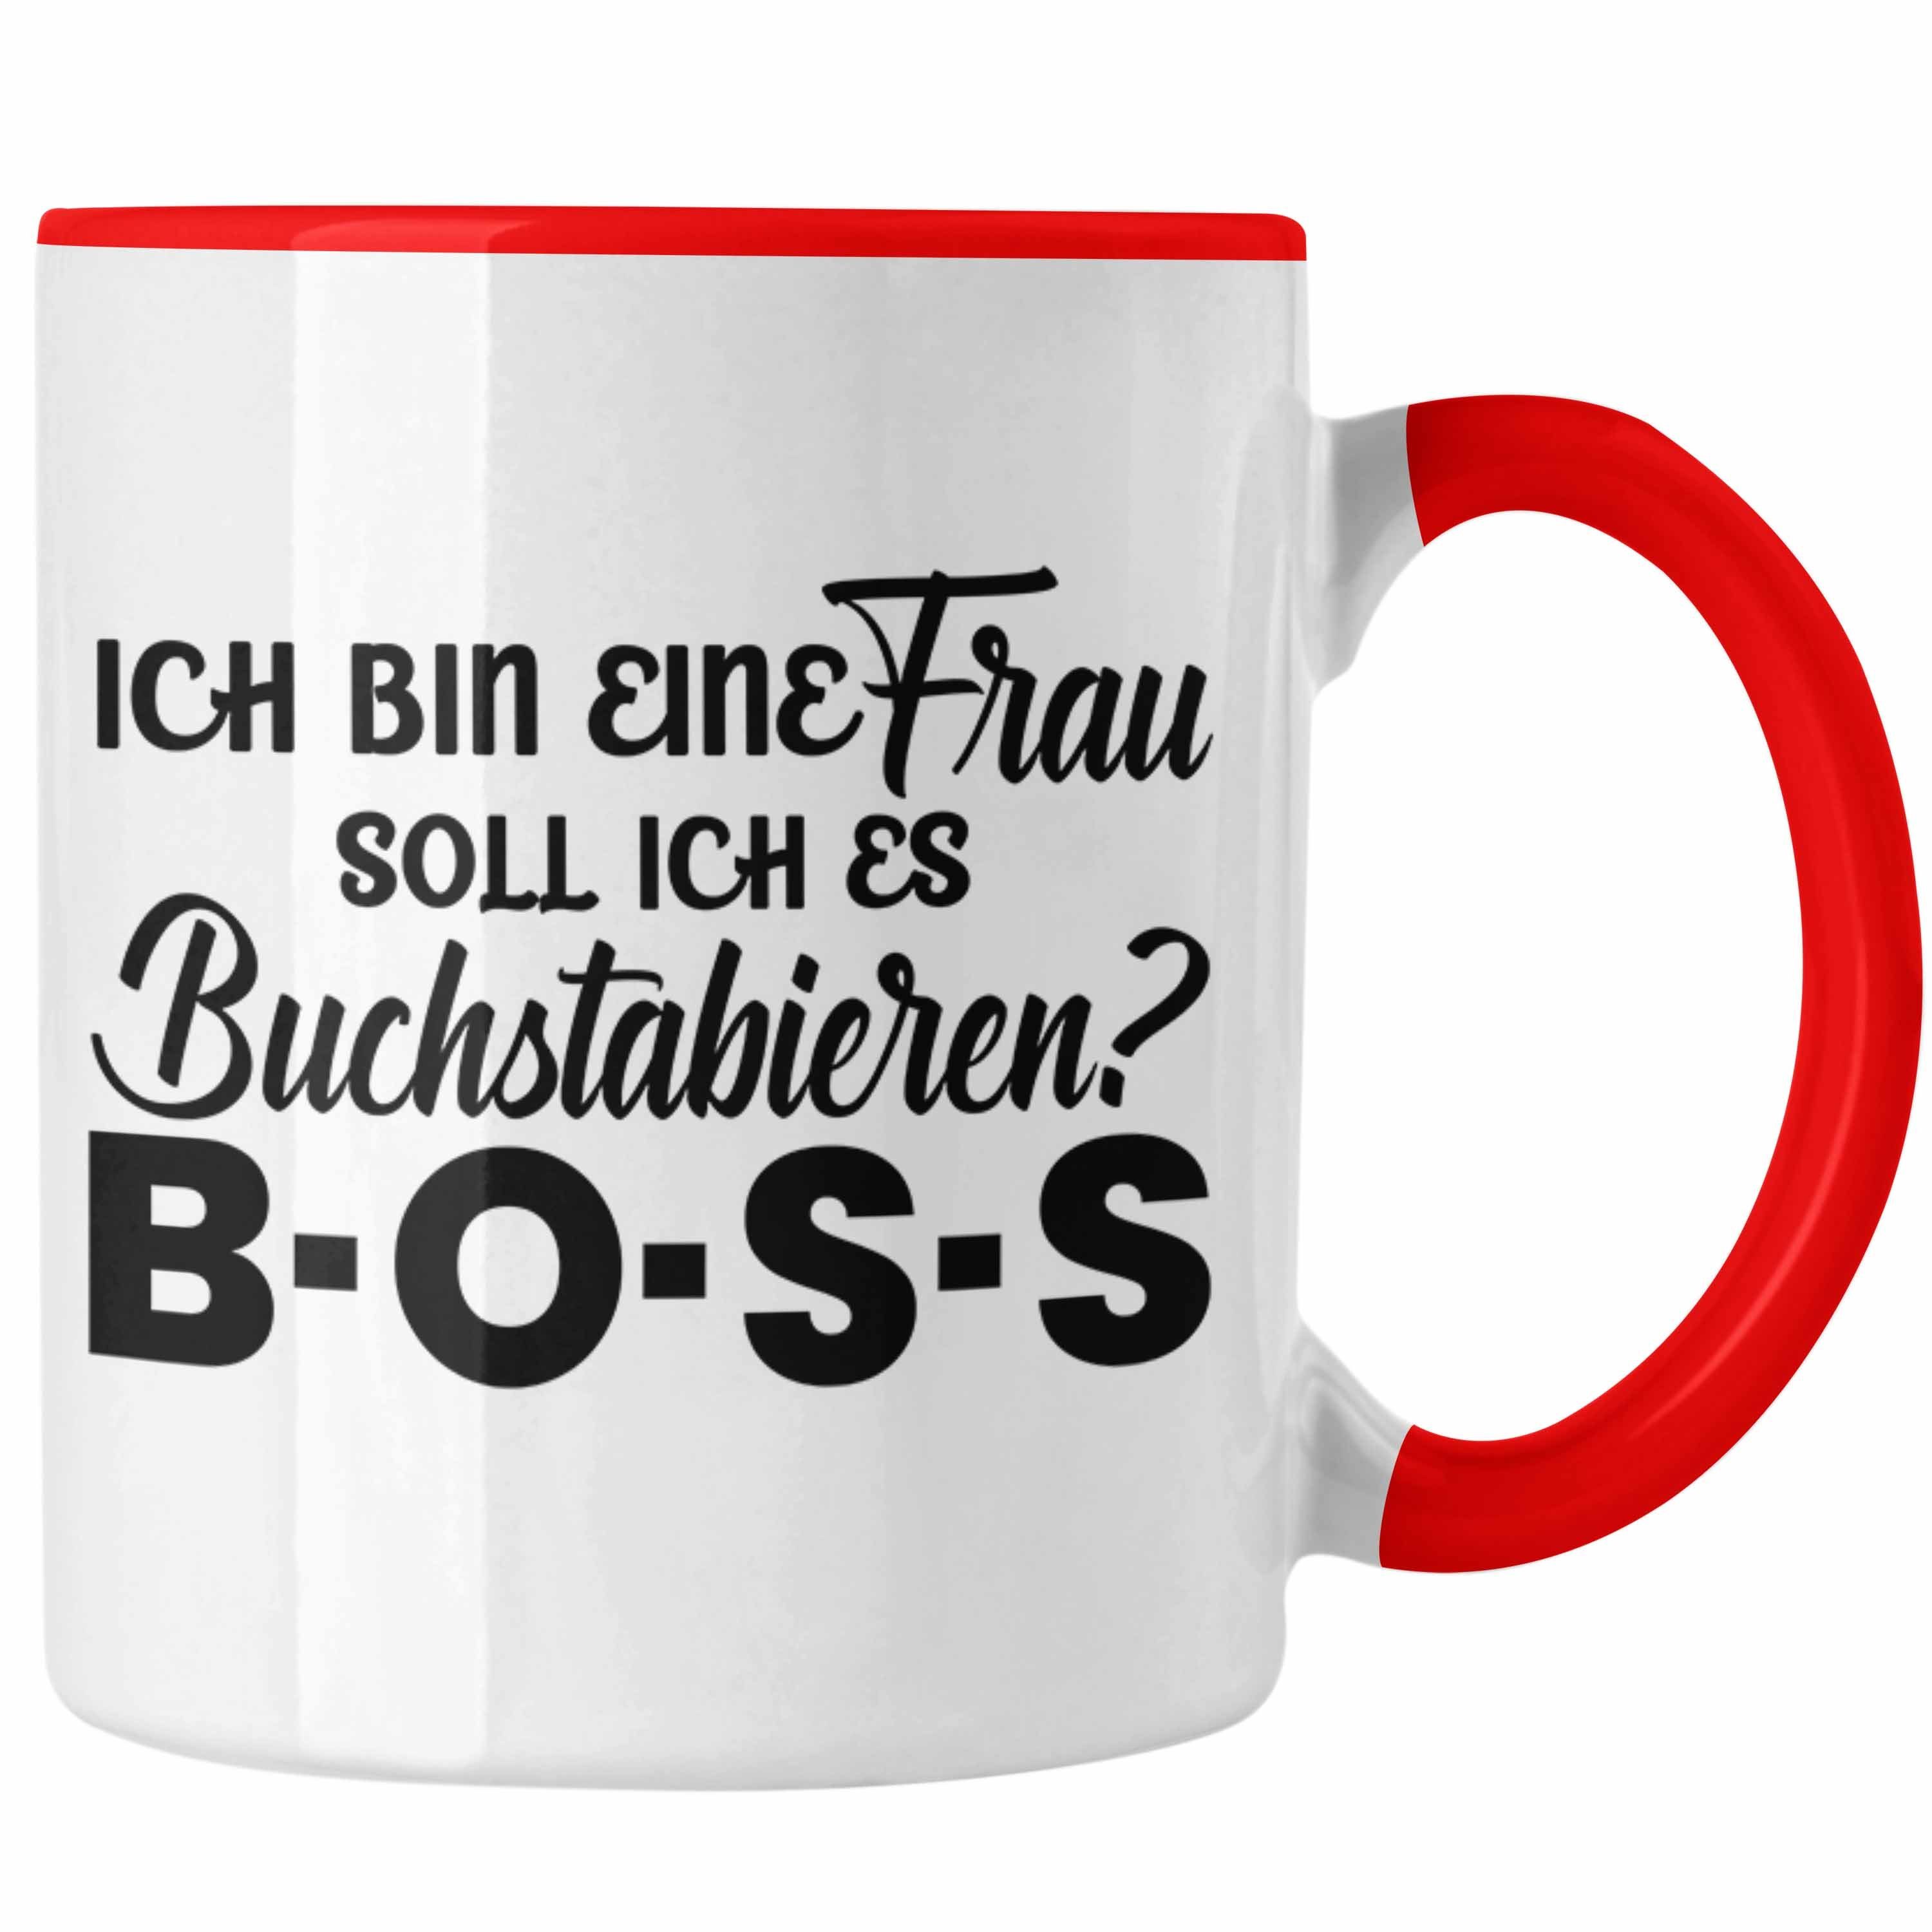 mit Boss Trendation Frau Frauentag Tasse Trendation Tasse Starke für Rot - Spruch Frauen Frauen Geschenk Tasse